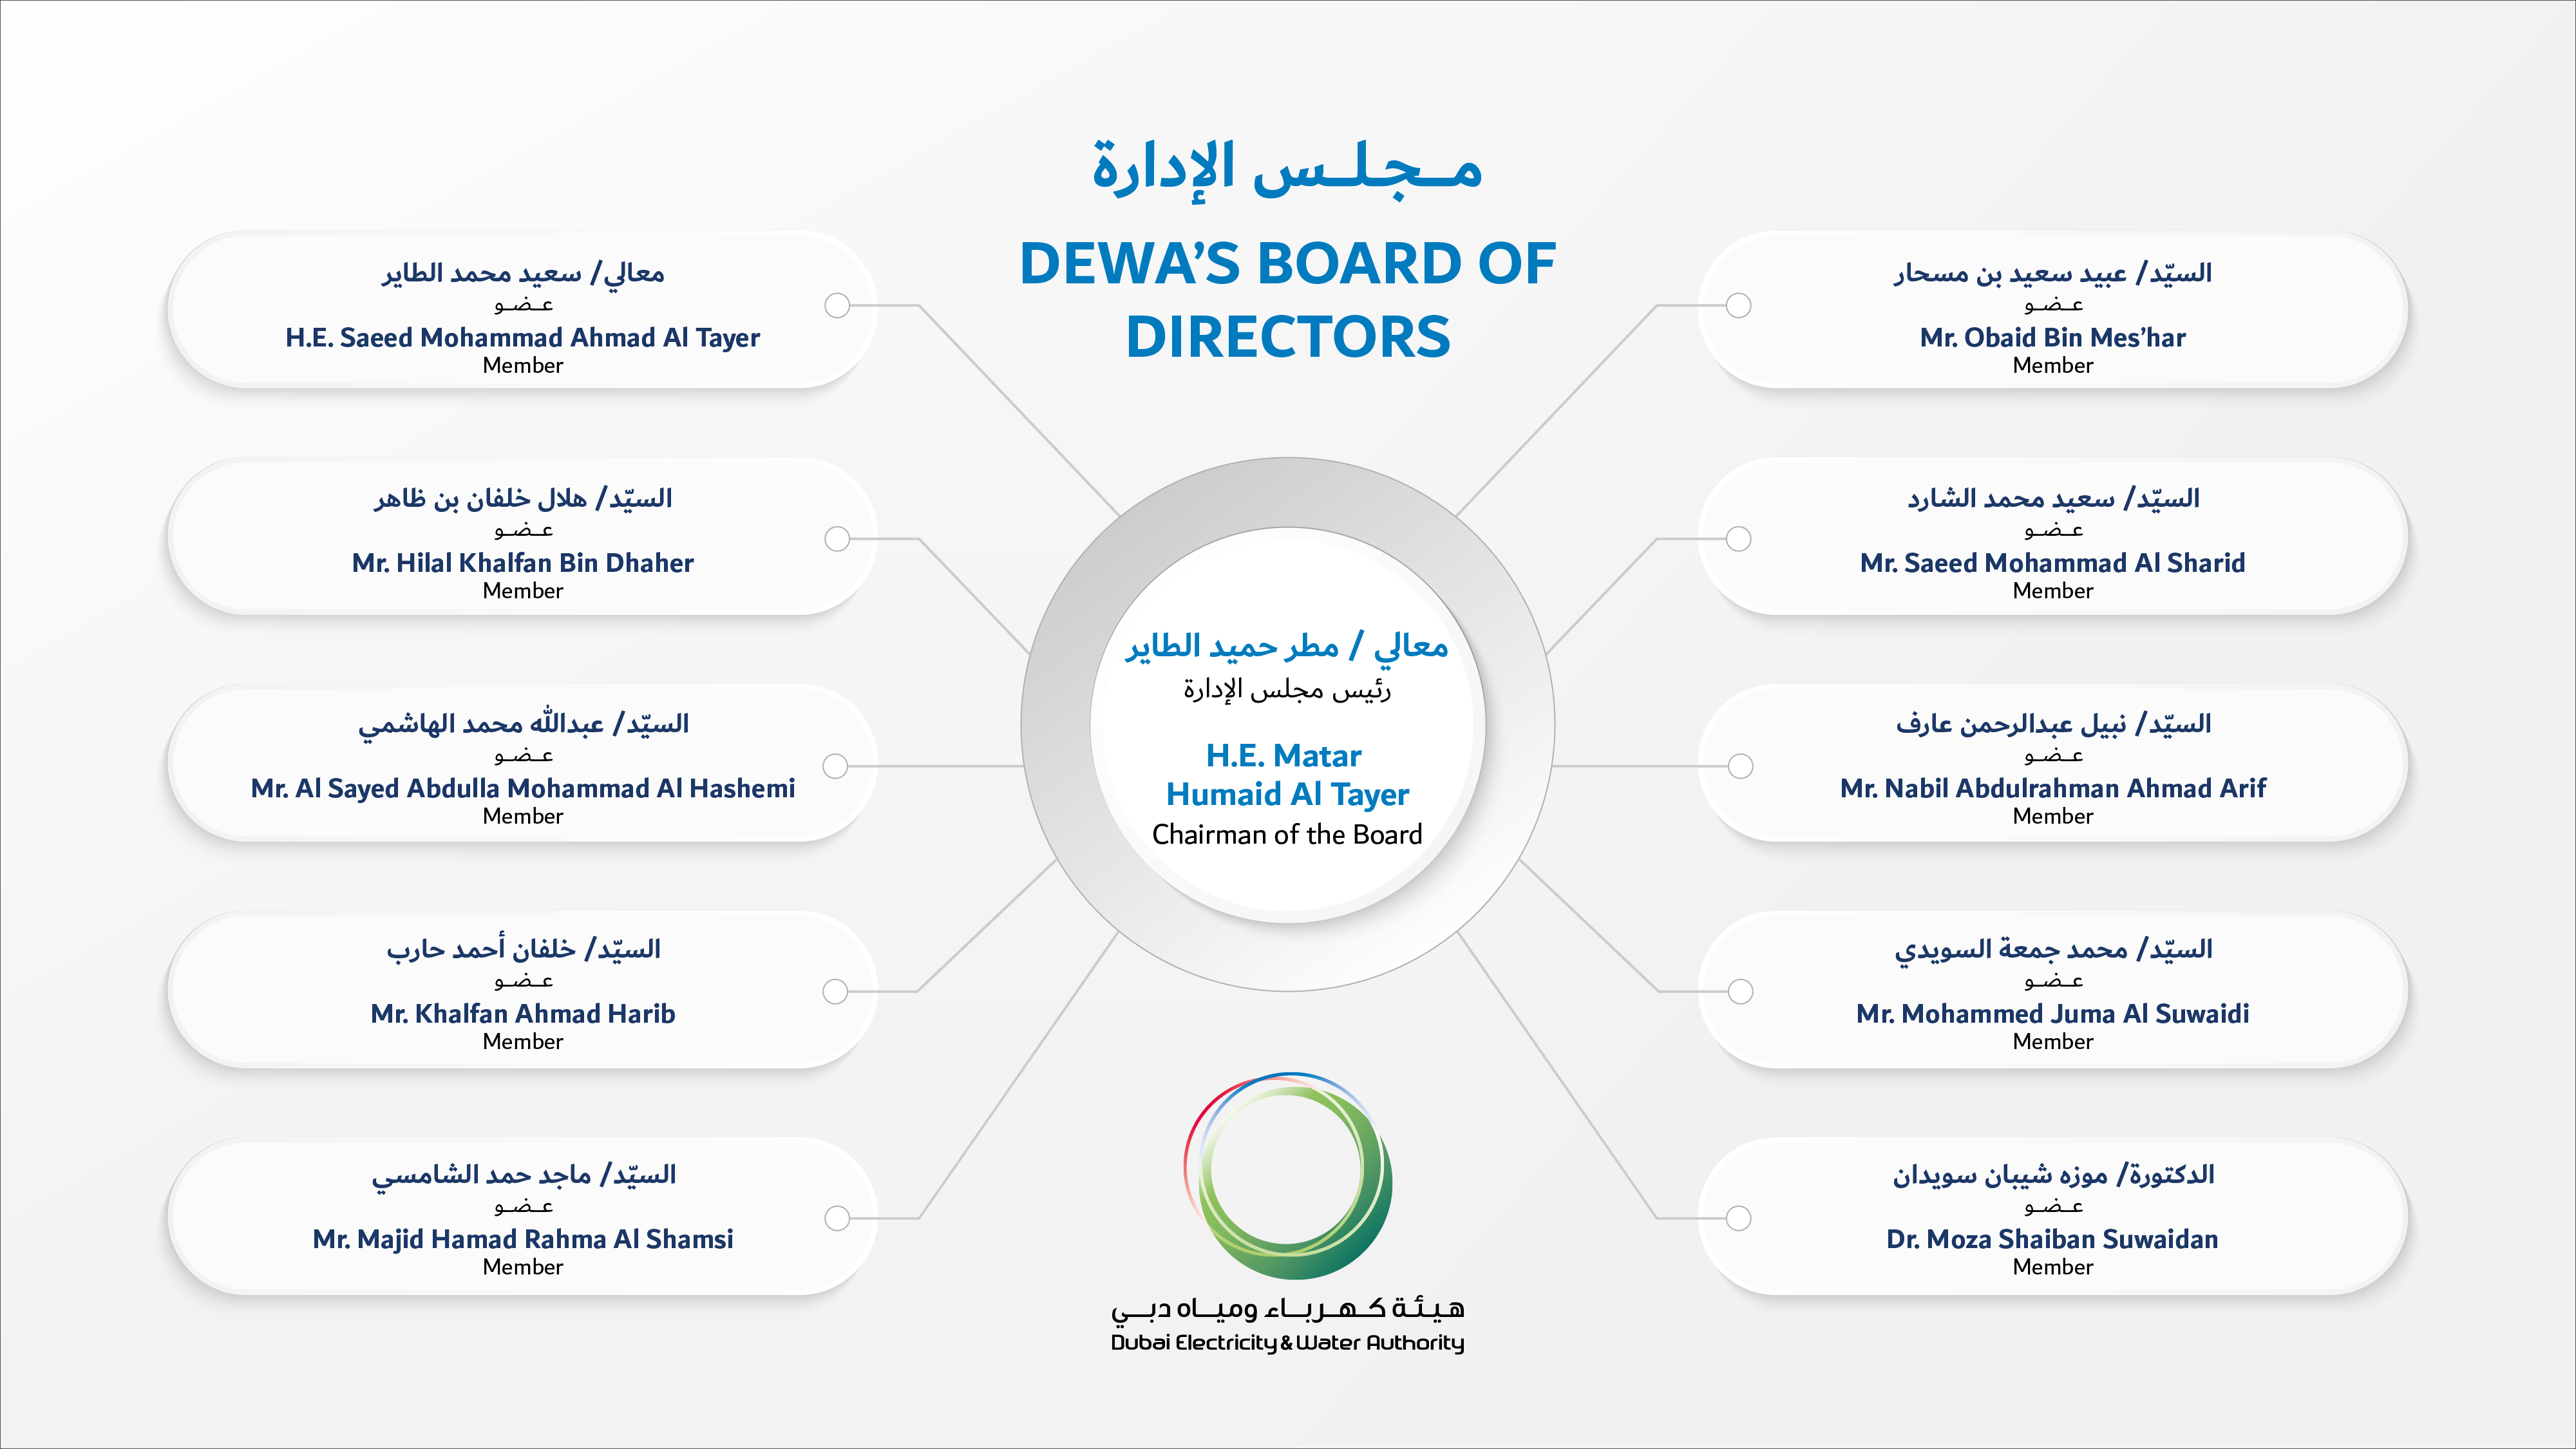 DEWA's Board of Directors